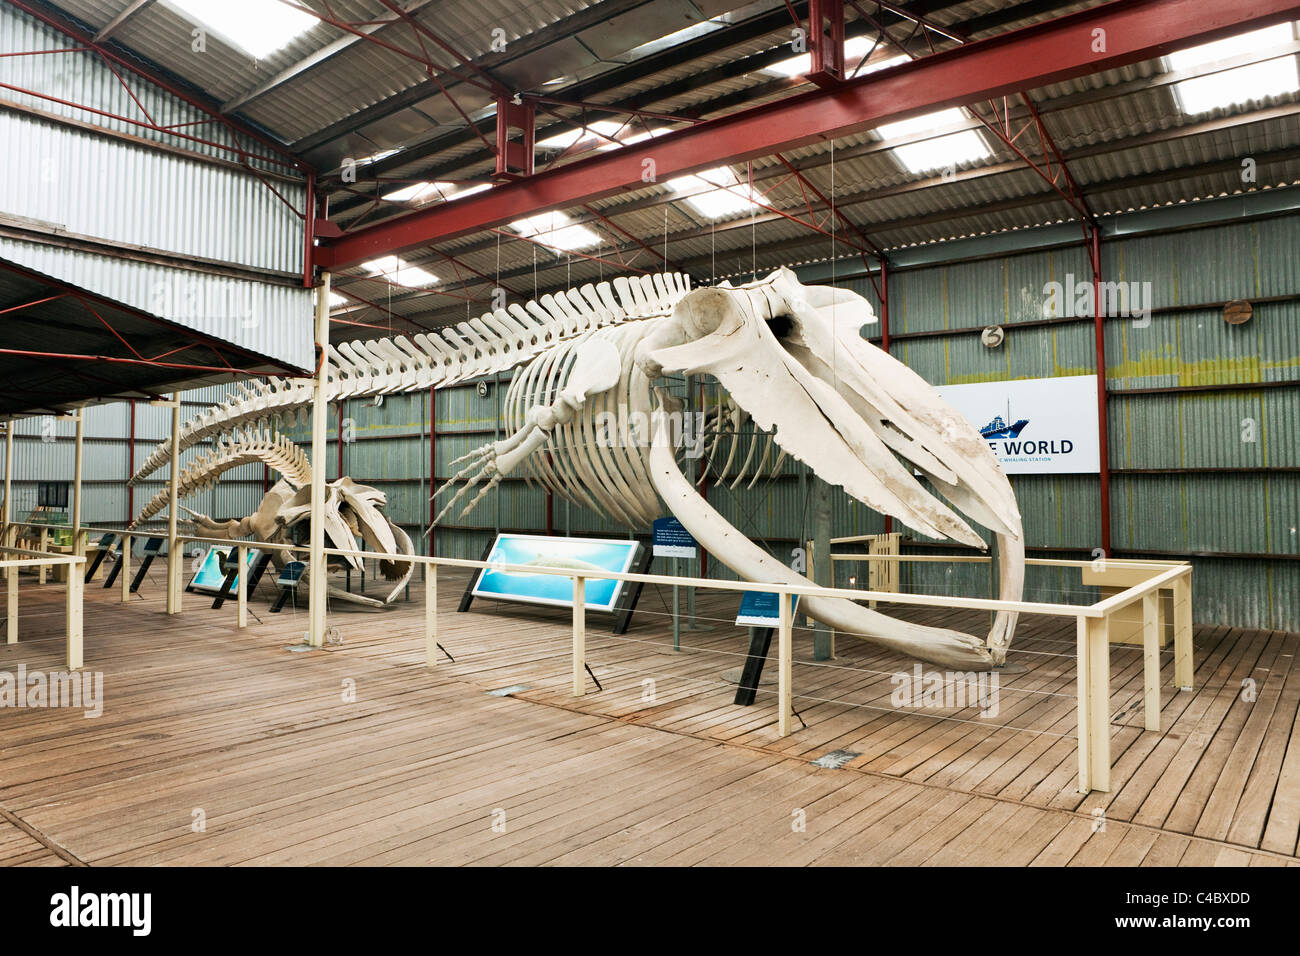 blauwal-skelett-im-whale-world-museum-franzose-bay-albany-western-australia-australien-c4bxdd.jpg